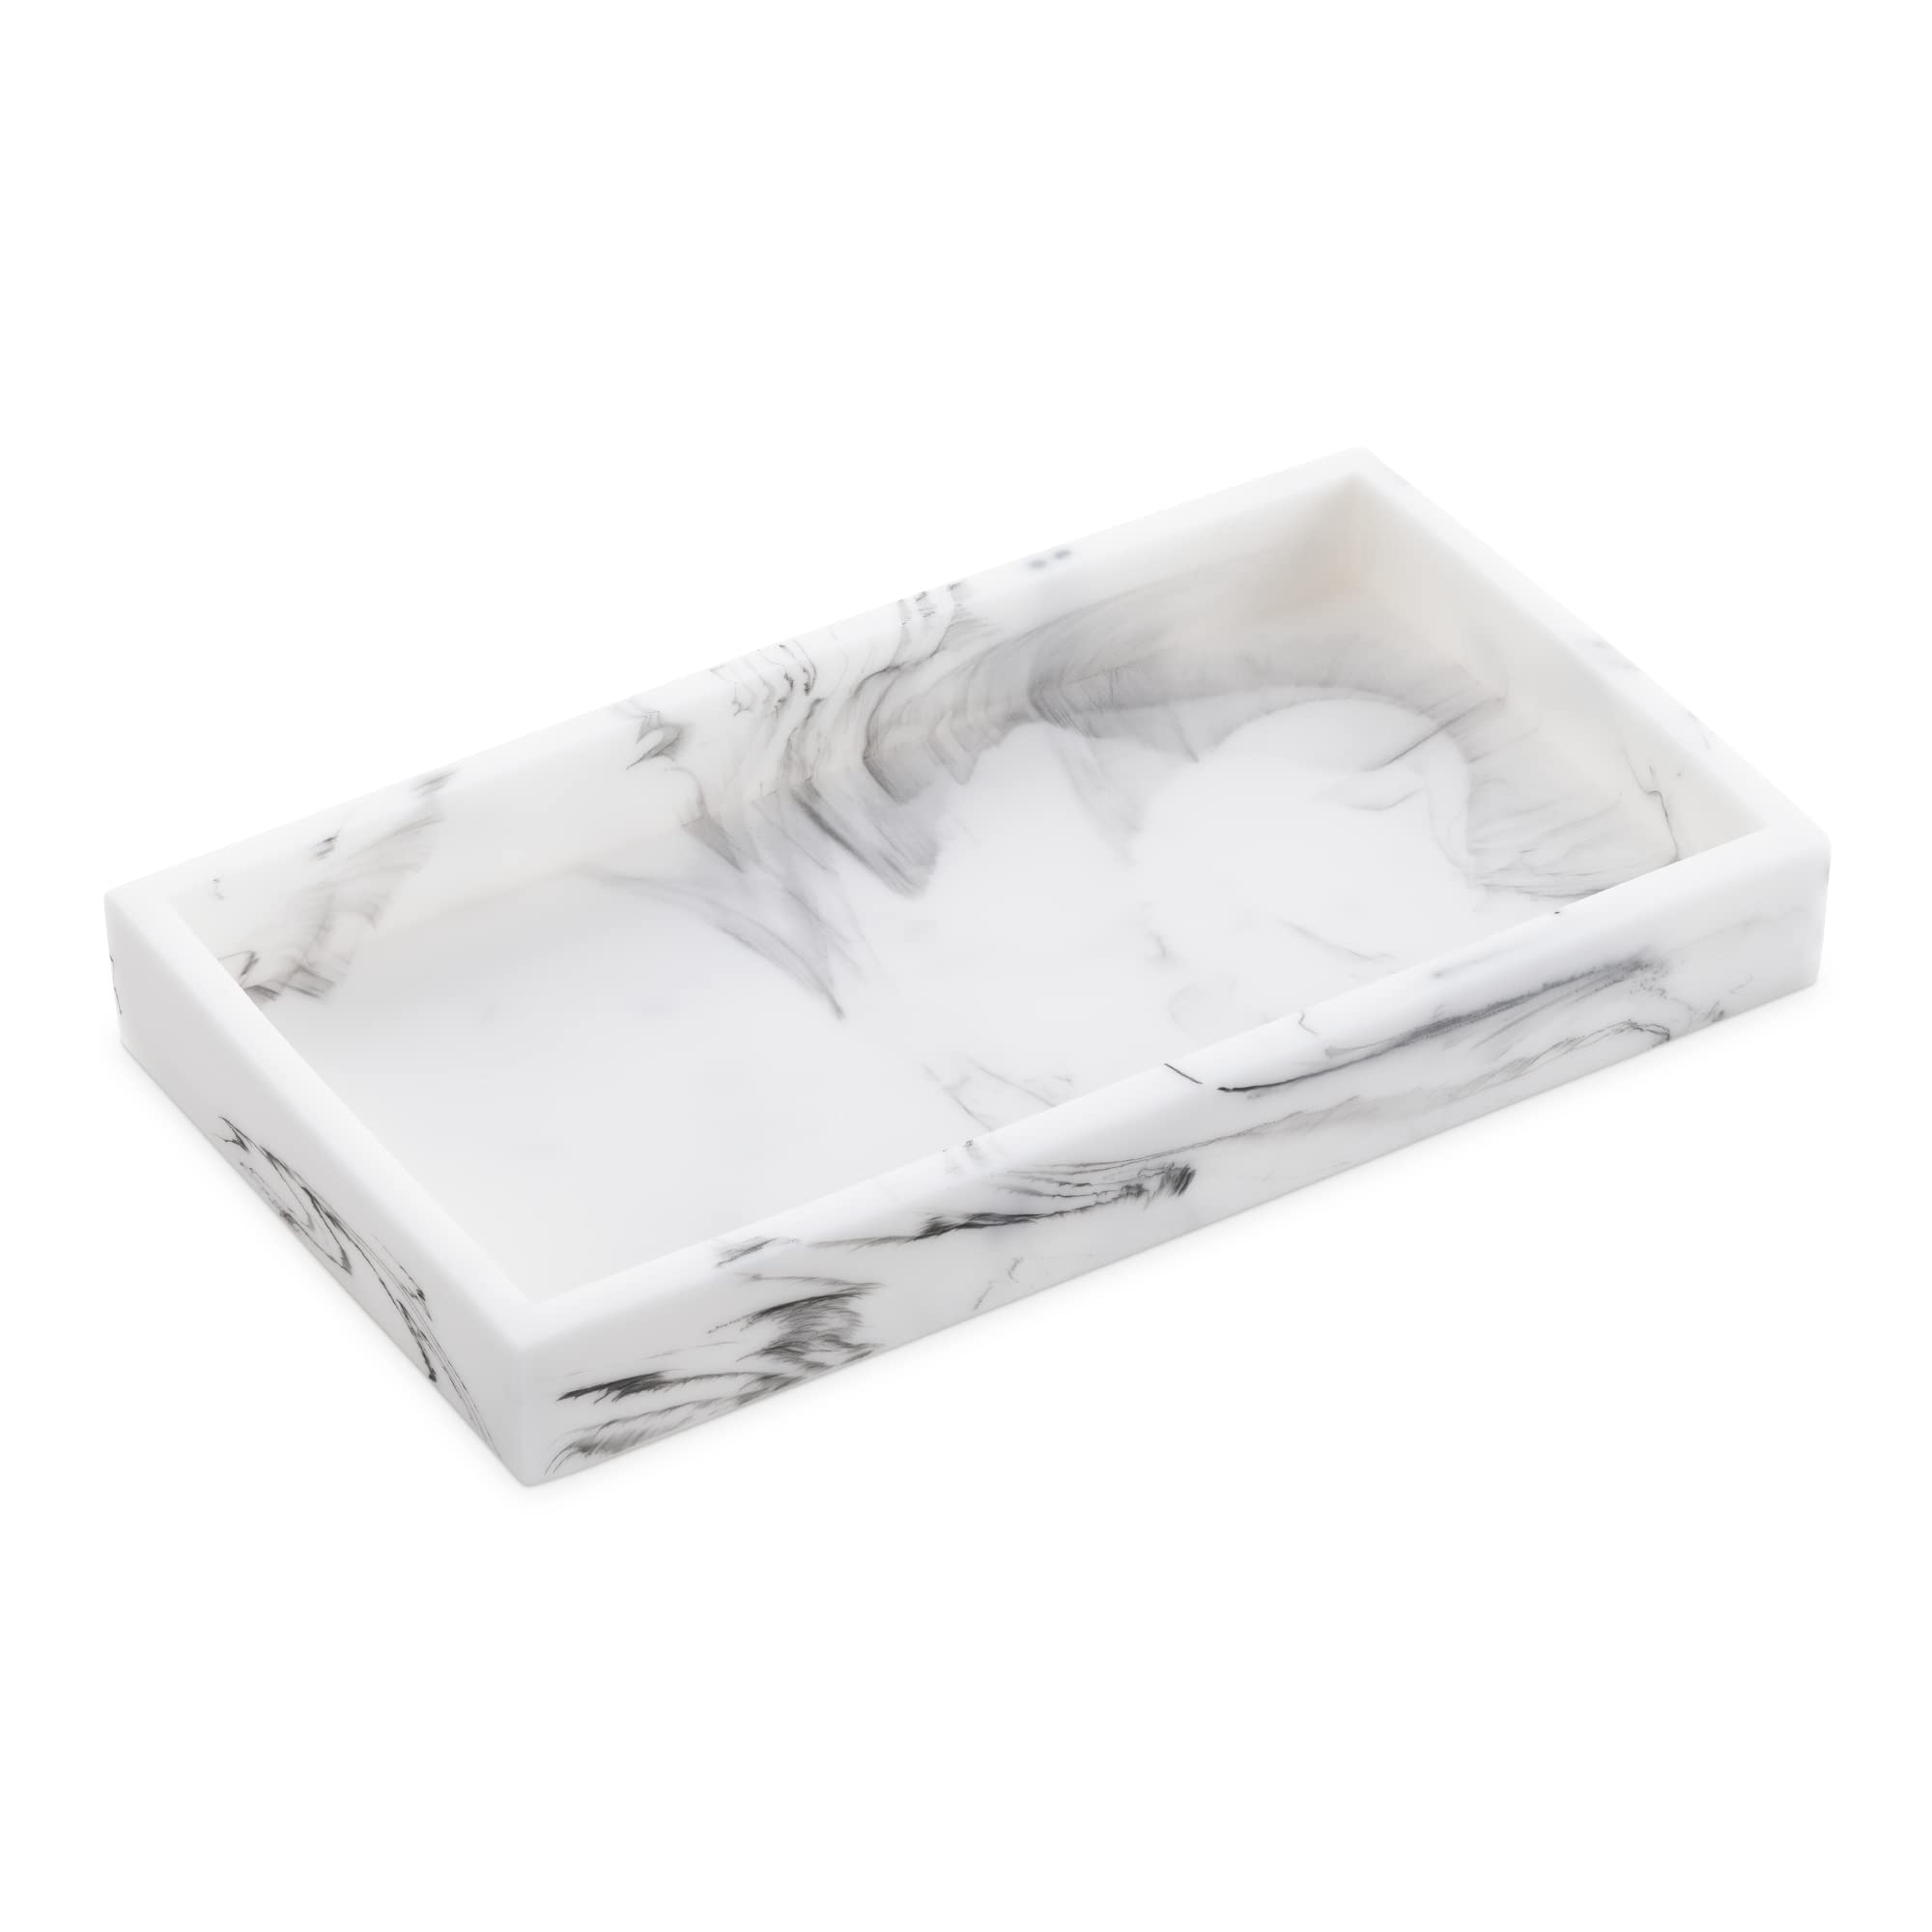 Navaris White Marble Resin Vanity Tray - 925 x 492 Bathroom Organizer Dish - Decorative Holder for Jewelry, Kitchen counter Top,